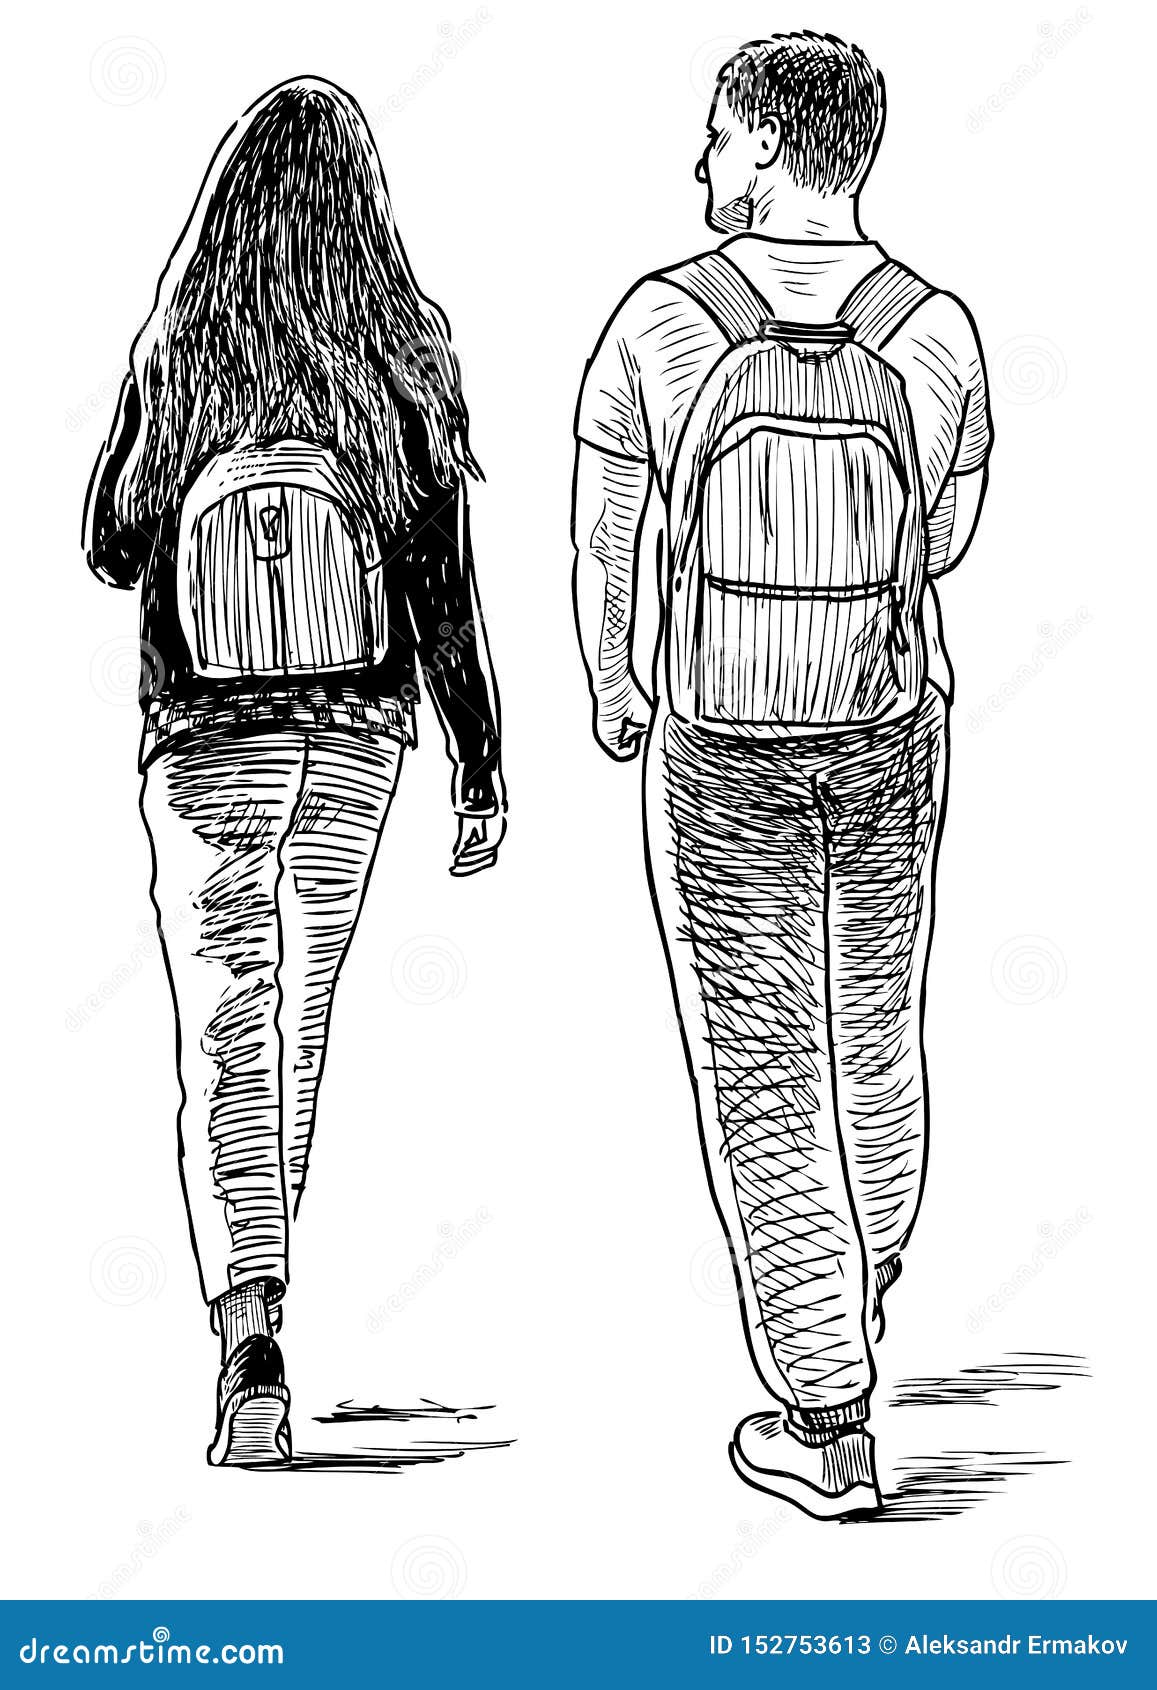 couple walking away drawing